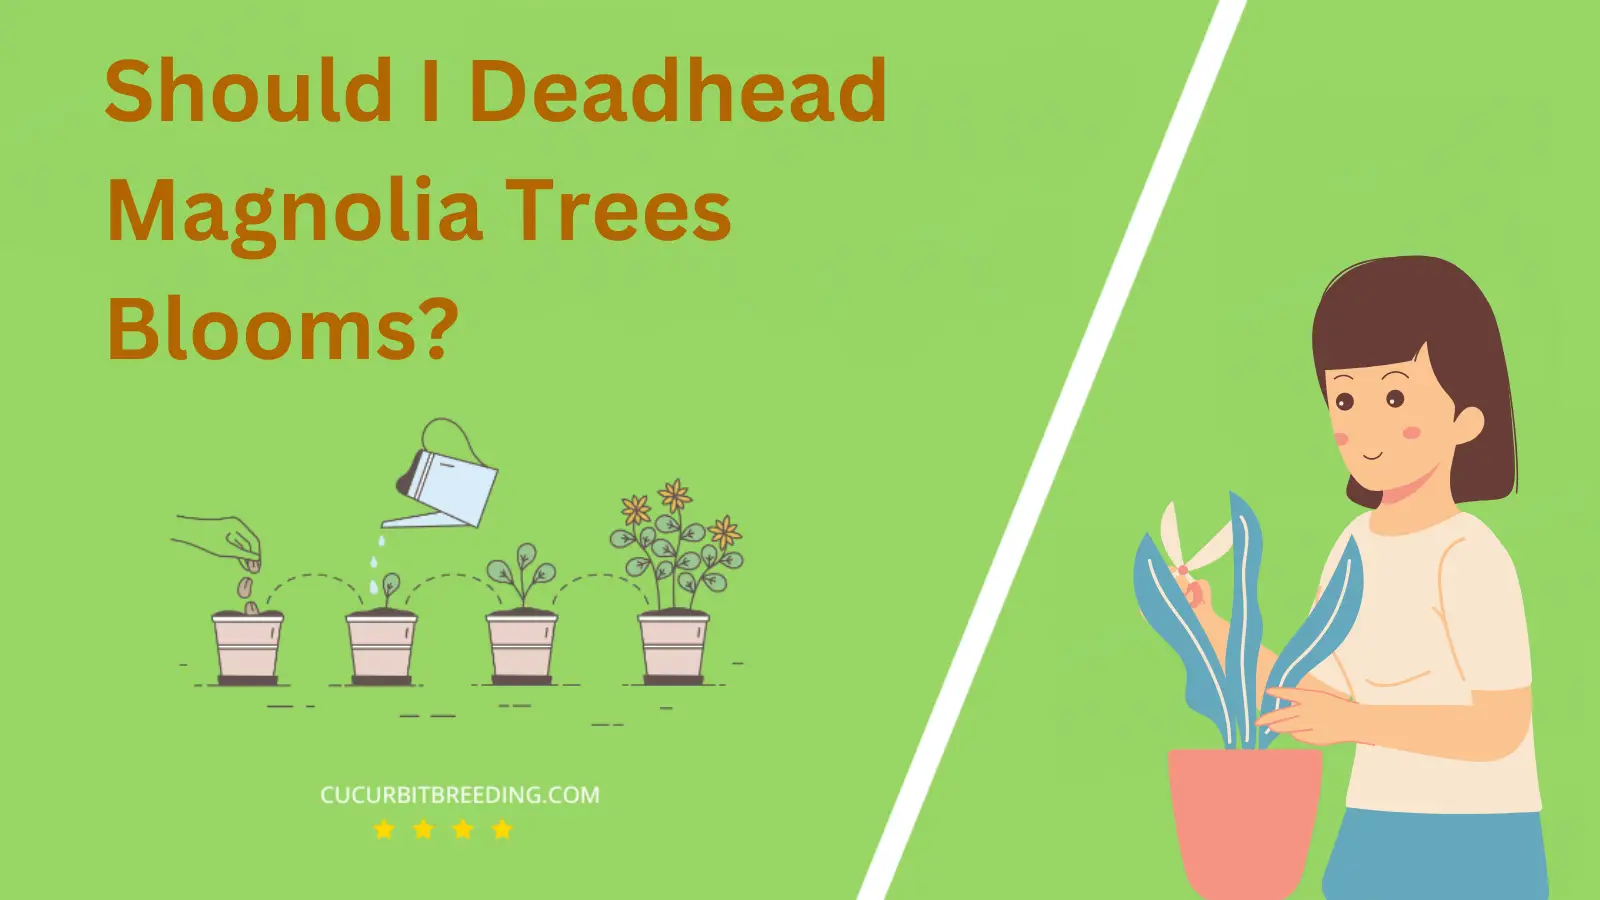 Should I Deadhead Magnolia Trees Blooms?